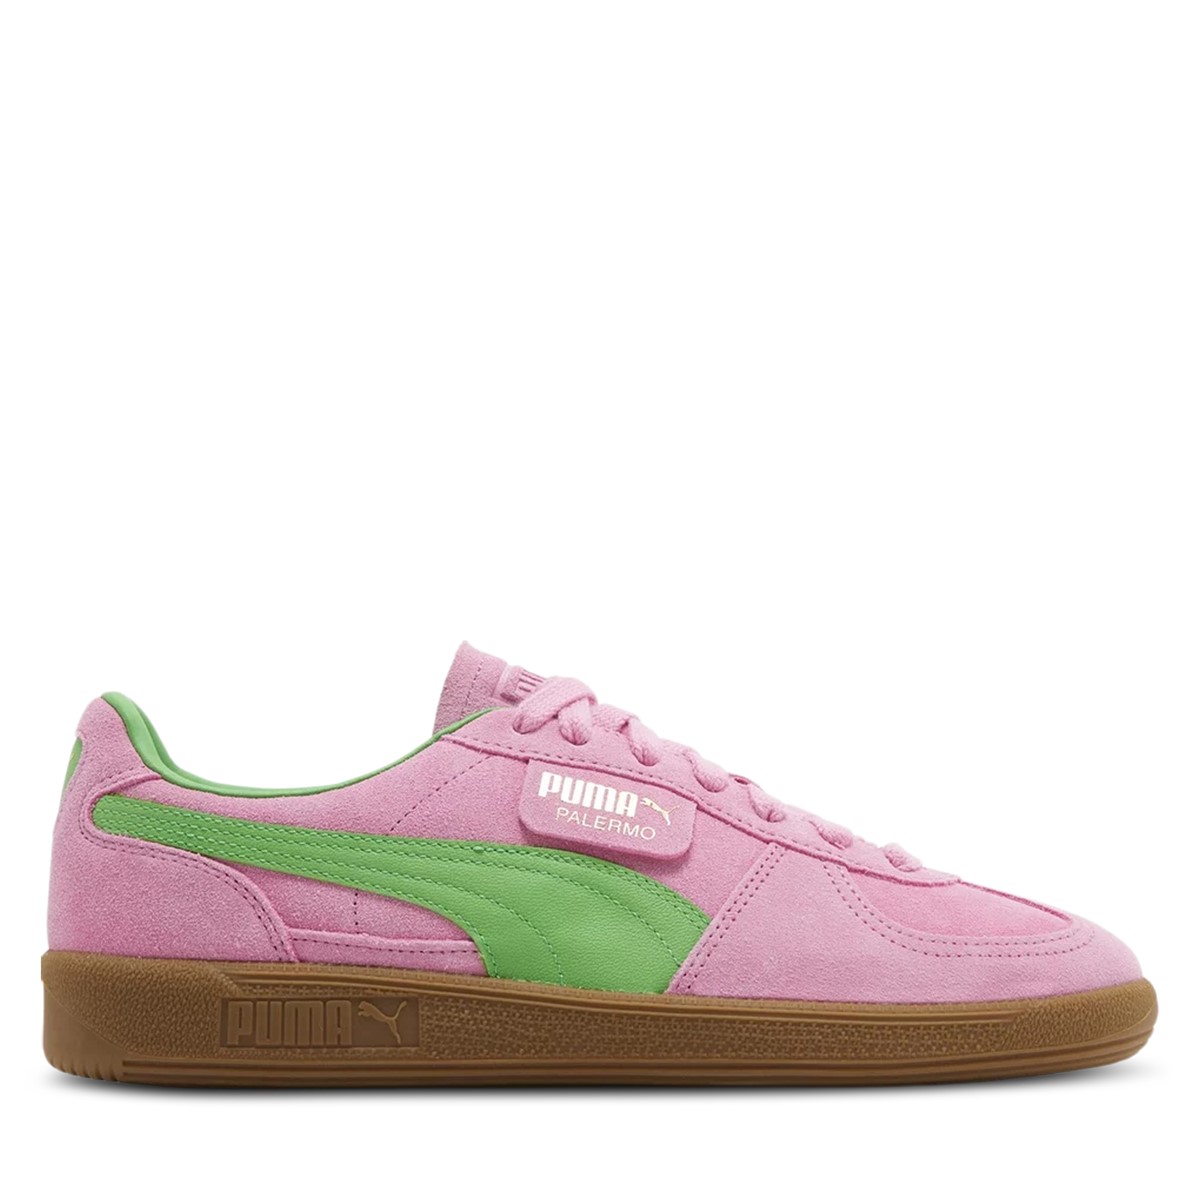 Women's Palermo Sneakers in Pink/Green